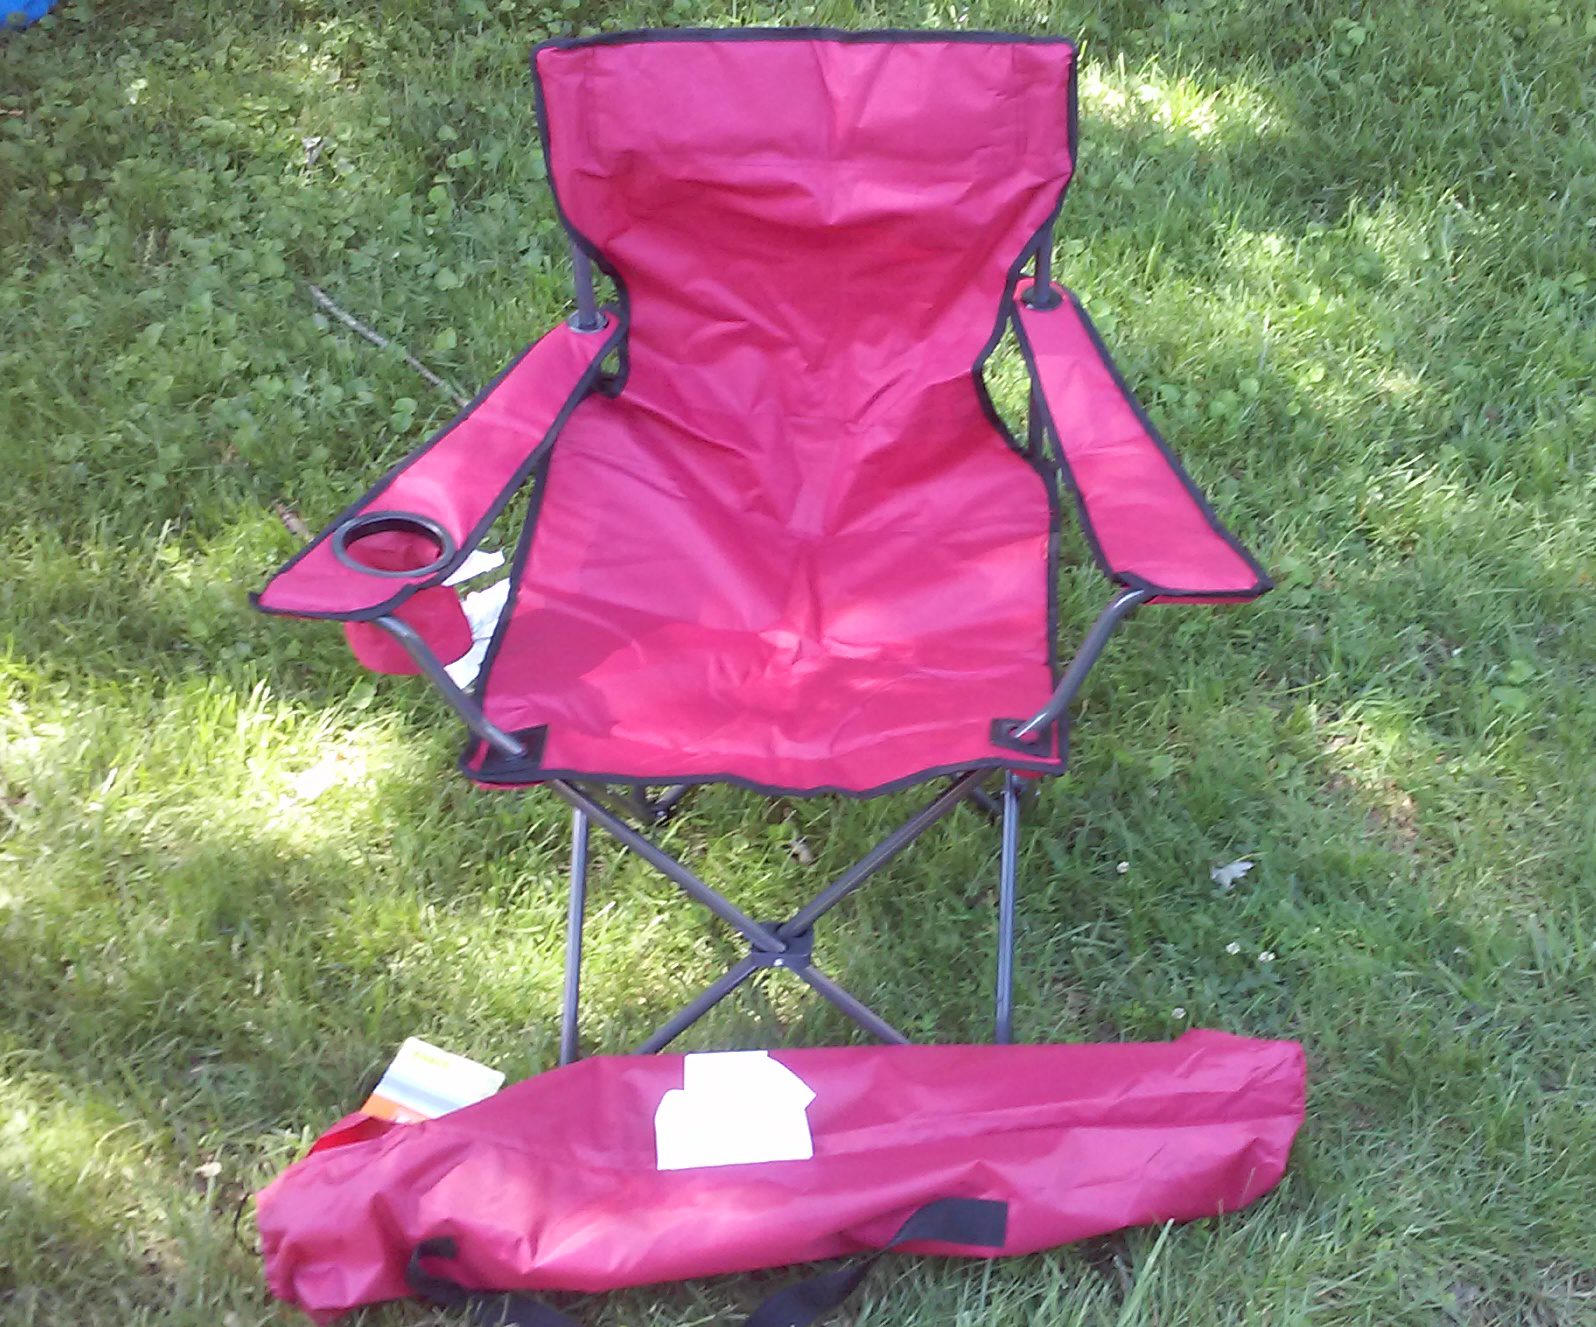 adventuridge chair with table